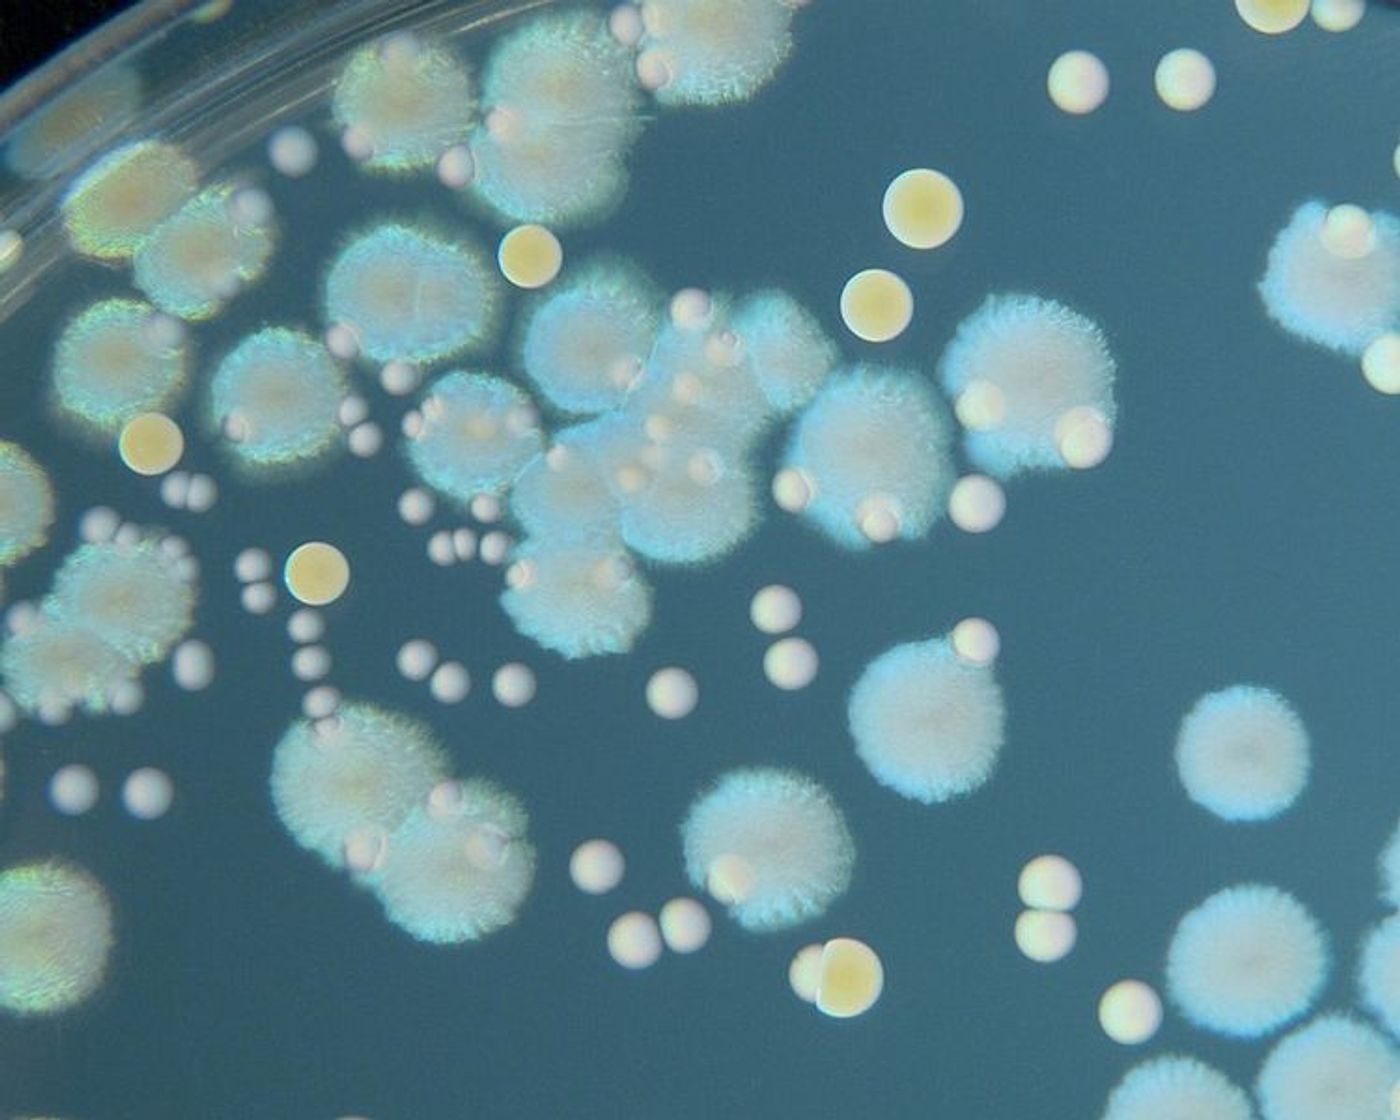 Pseudomonas aeruginosa, Enterococcus faecalis and Staphylococcus aureus on Tryptic Soy Agar. Credit: Wikimedia User HansN